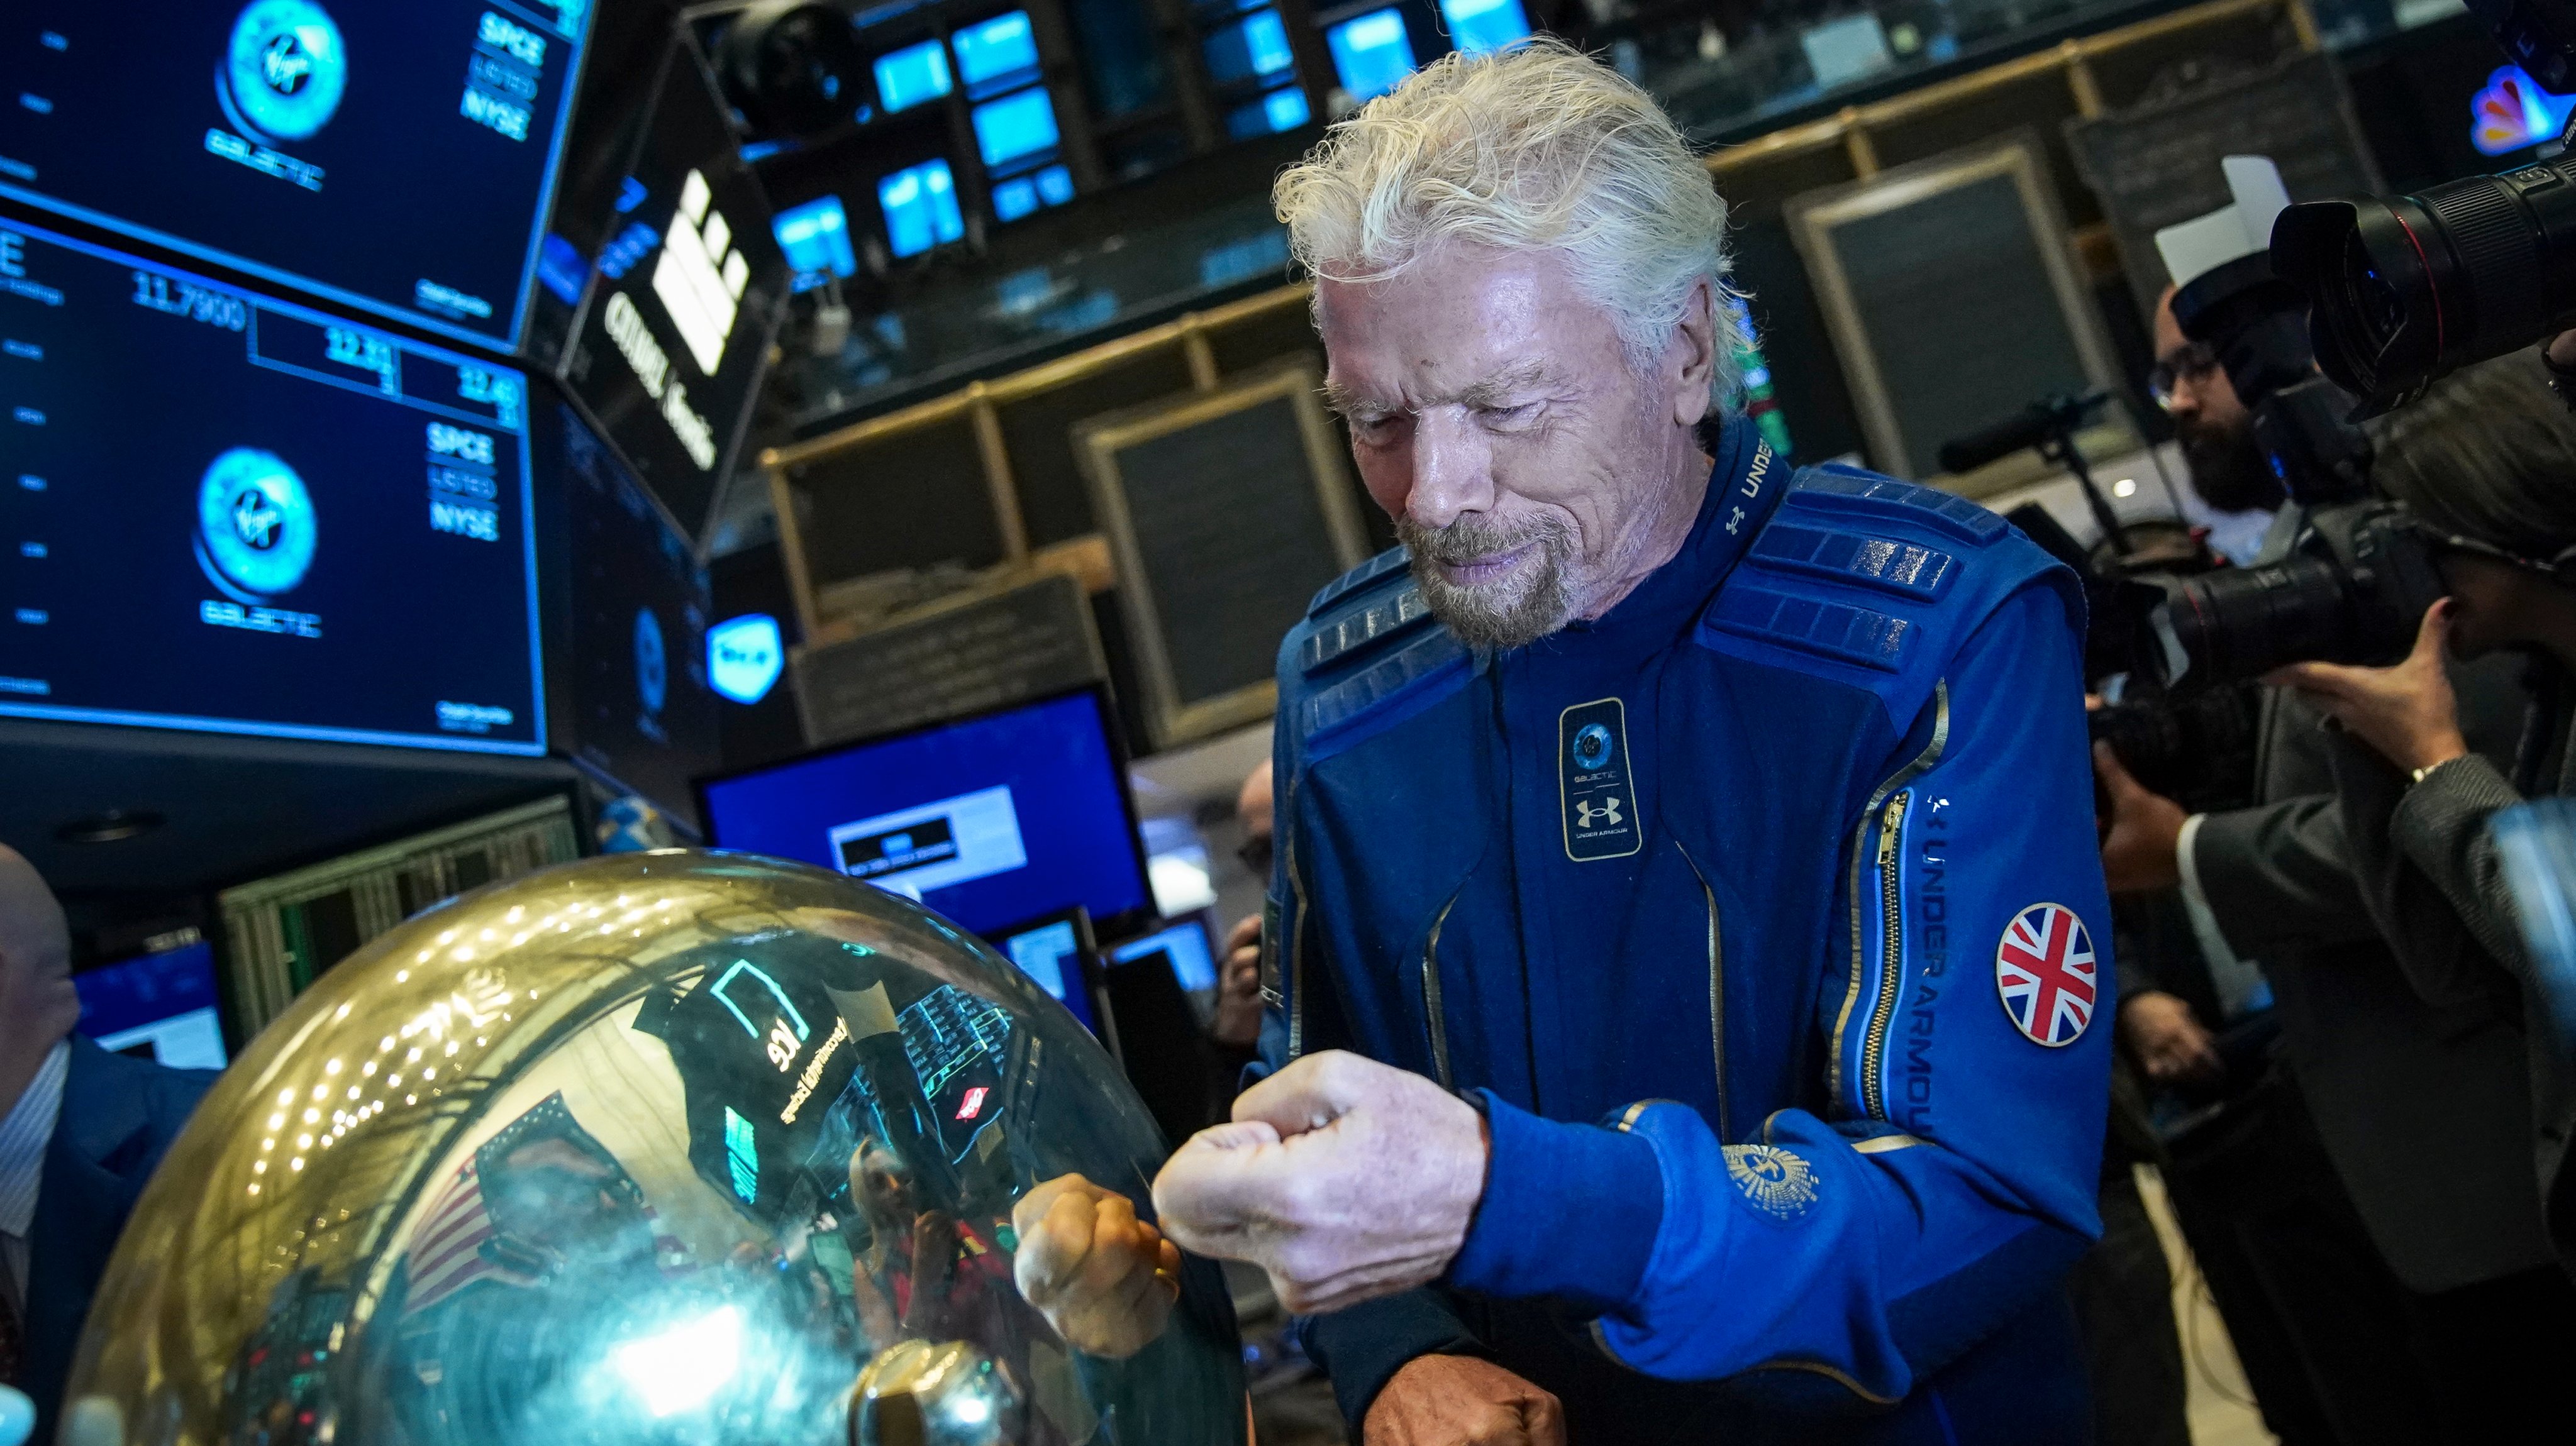 Sir Richard Branson Rings Opening Bell As Virgin Galactic Holdings Joins NYSE